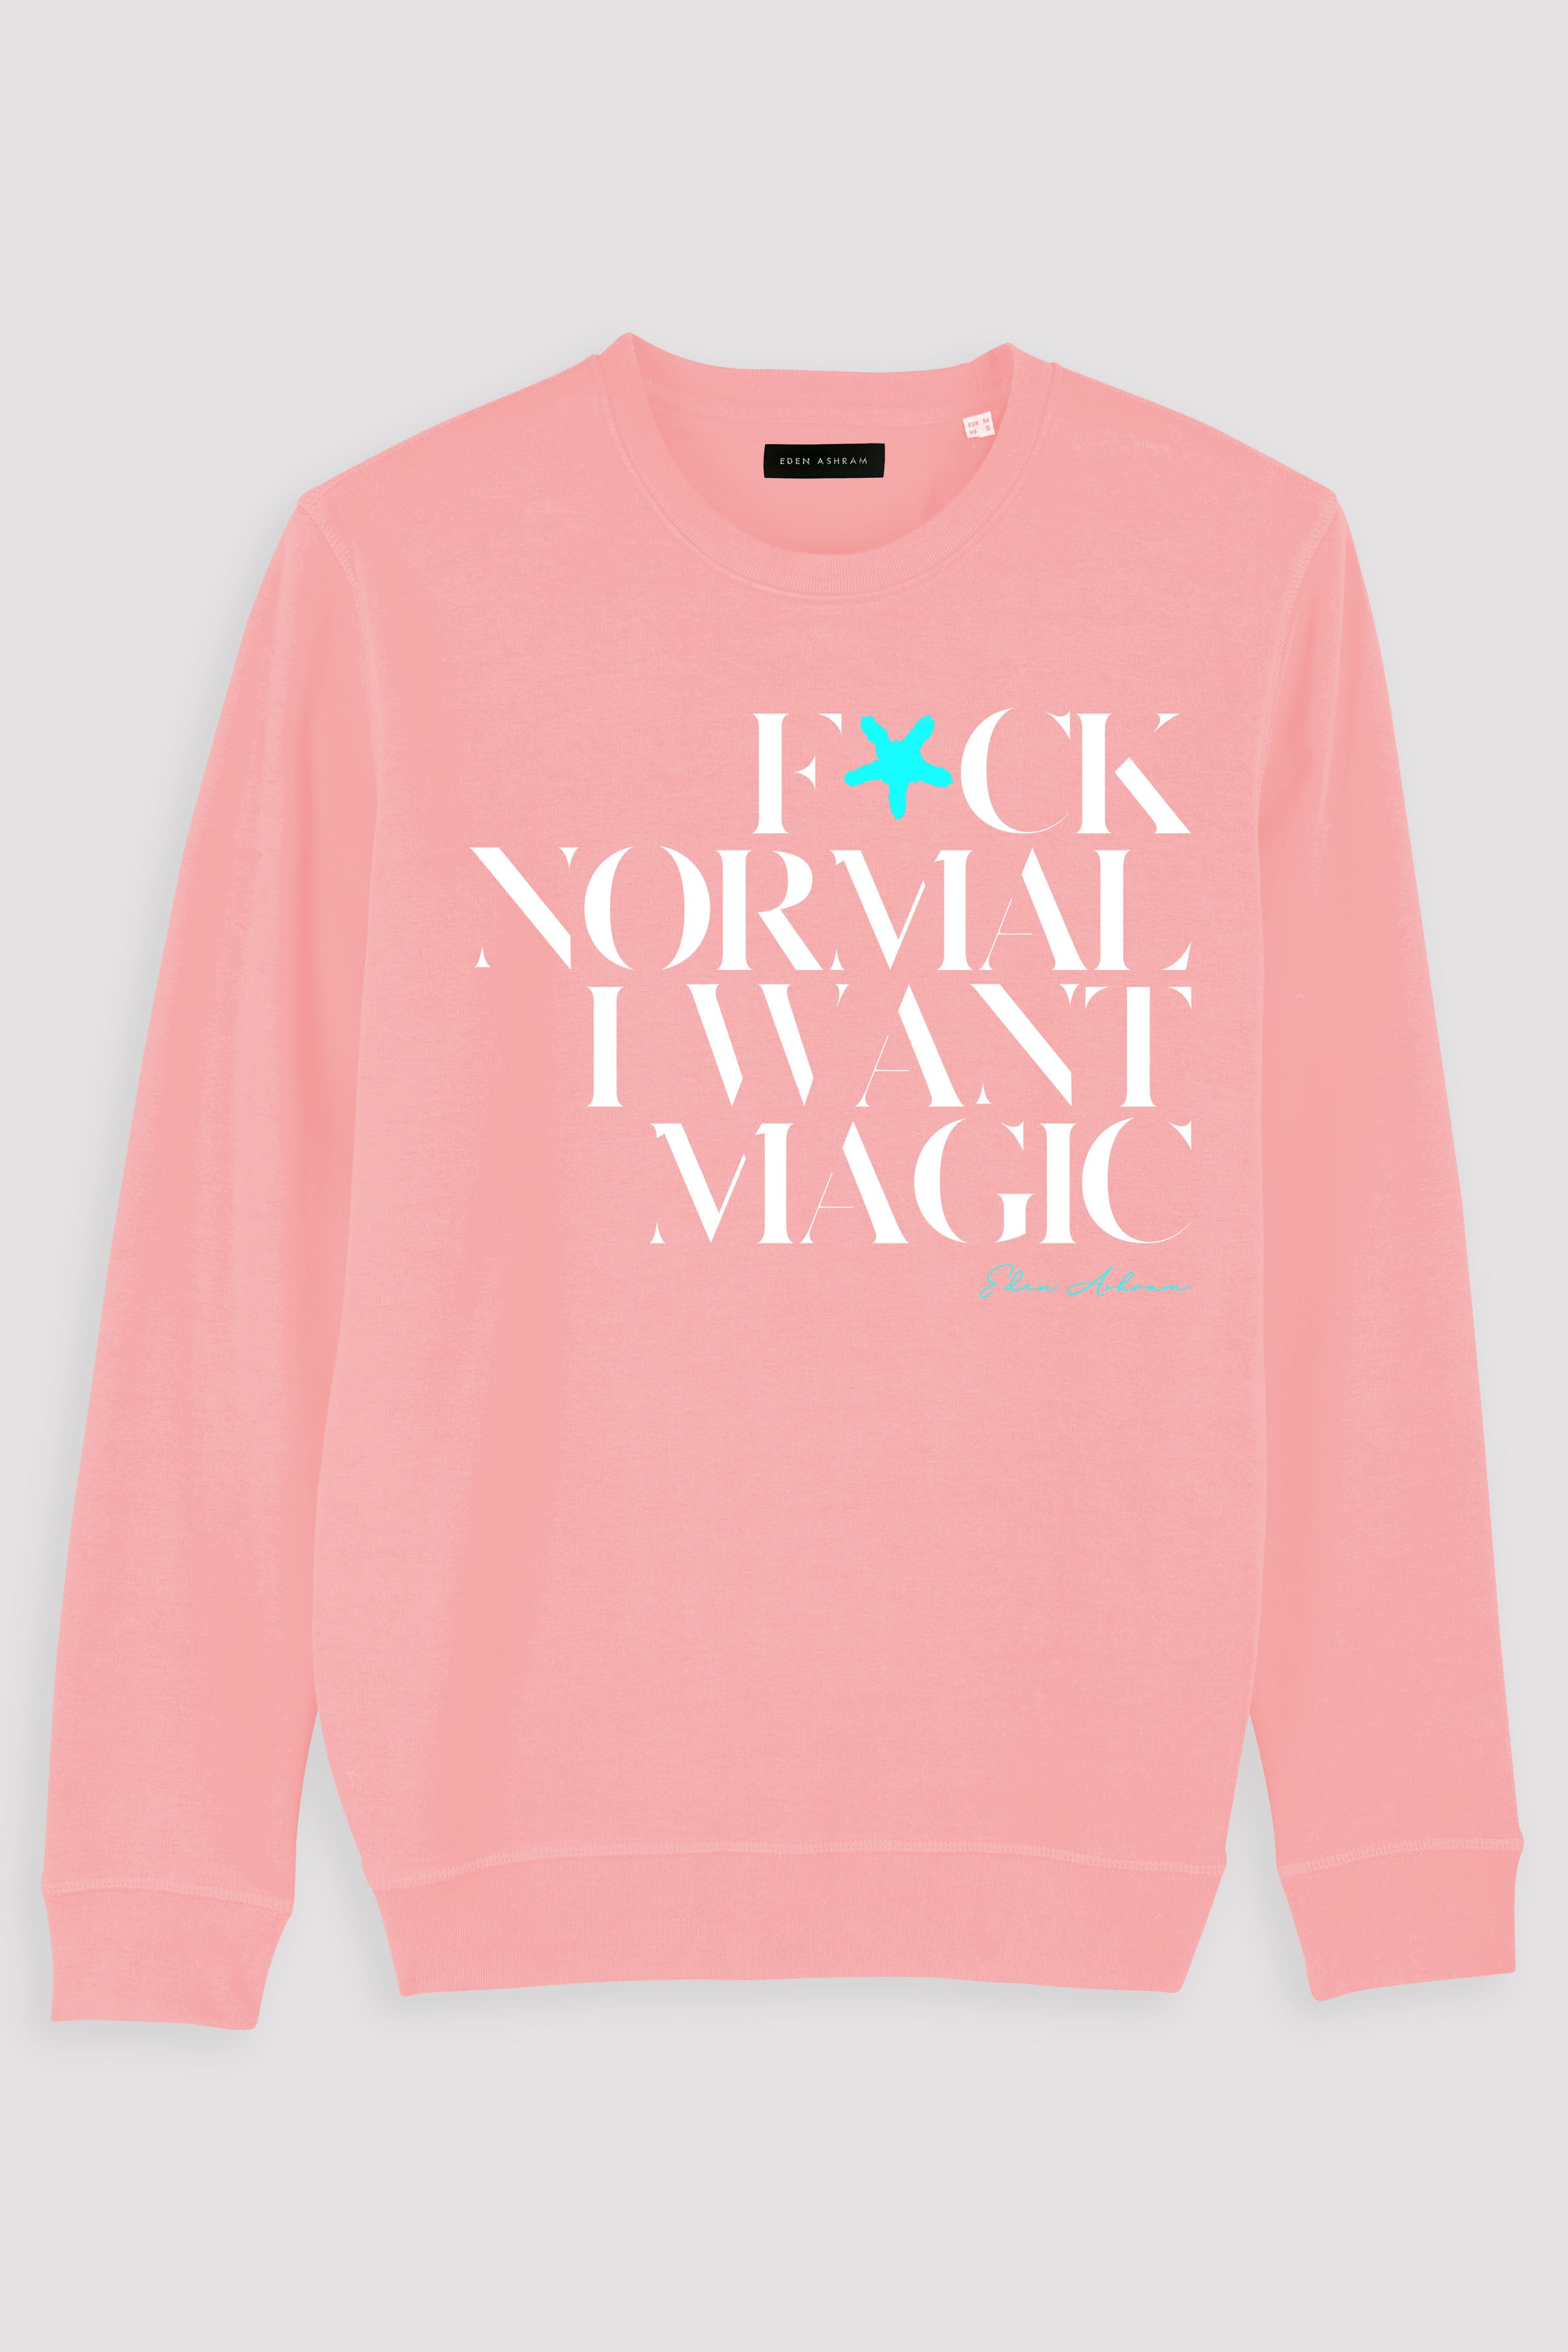 EDEN ASHRAM F*ck Normal I Want Magic Premium Crew Neck Sweatshirt Coral Pink